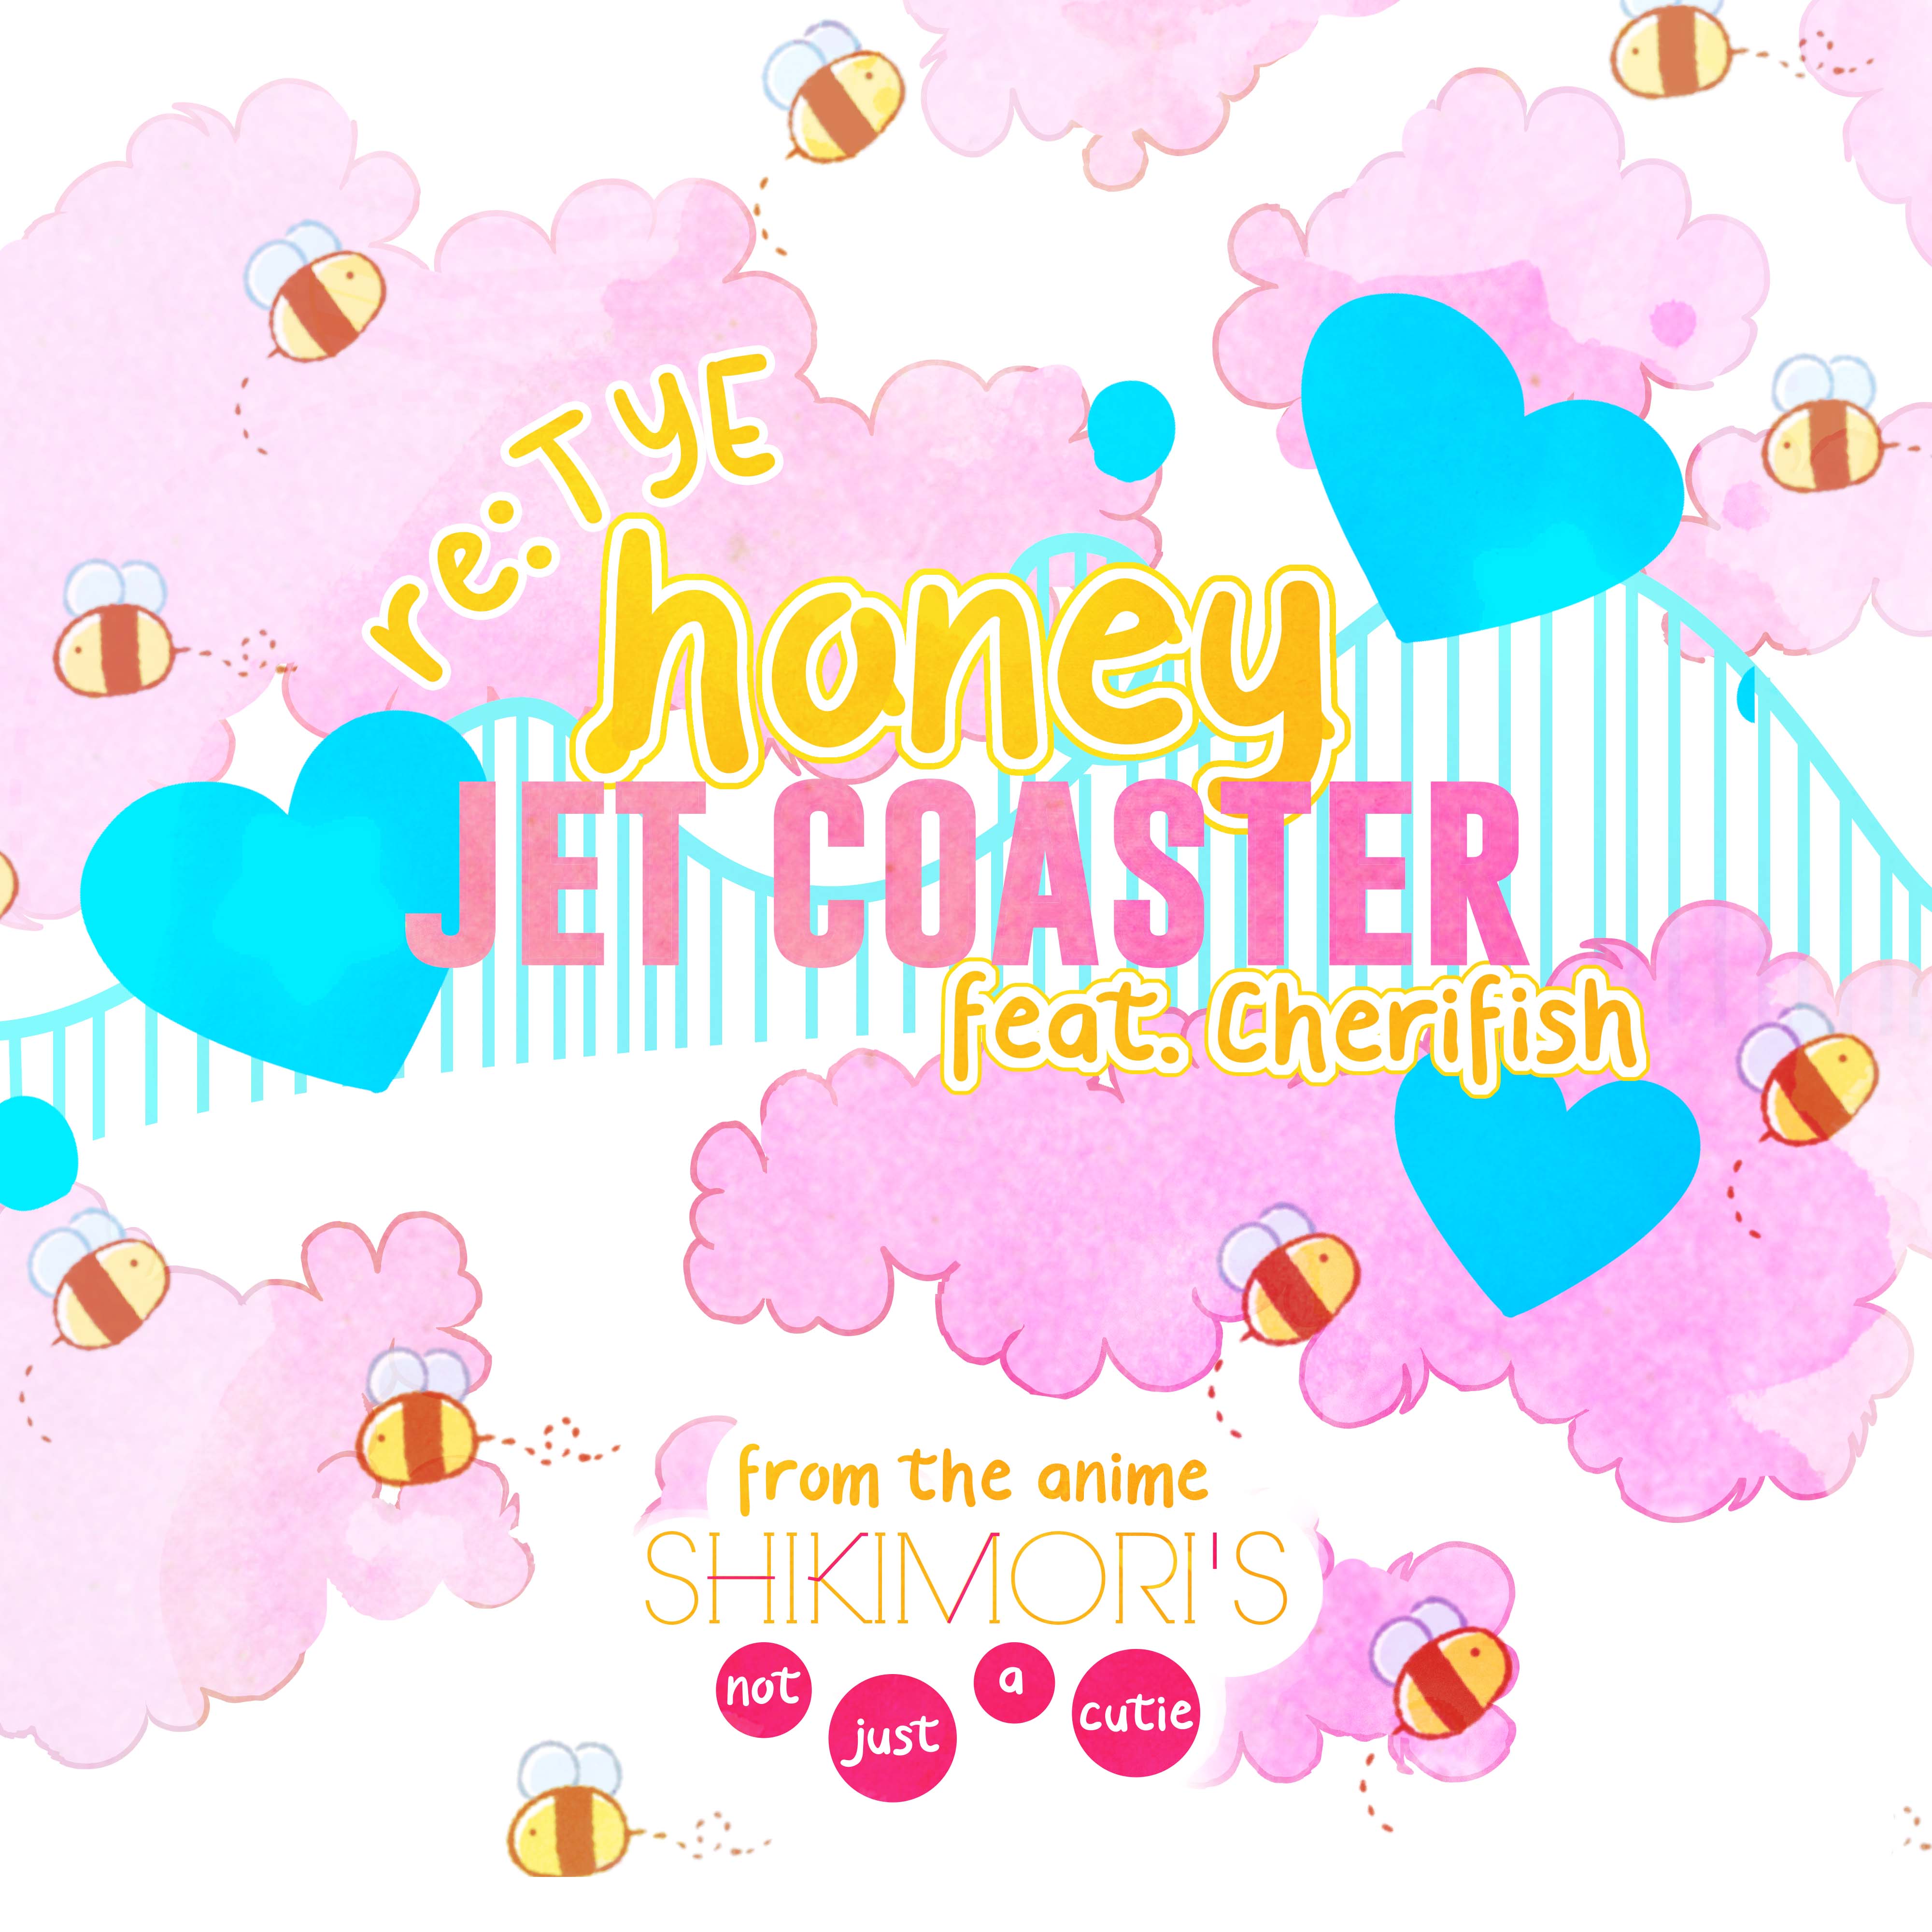 Shikimori's Not Just a Cutie OP - Honey Jet Coaster